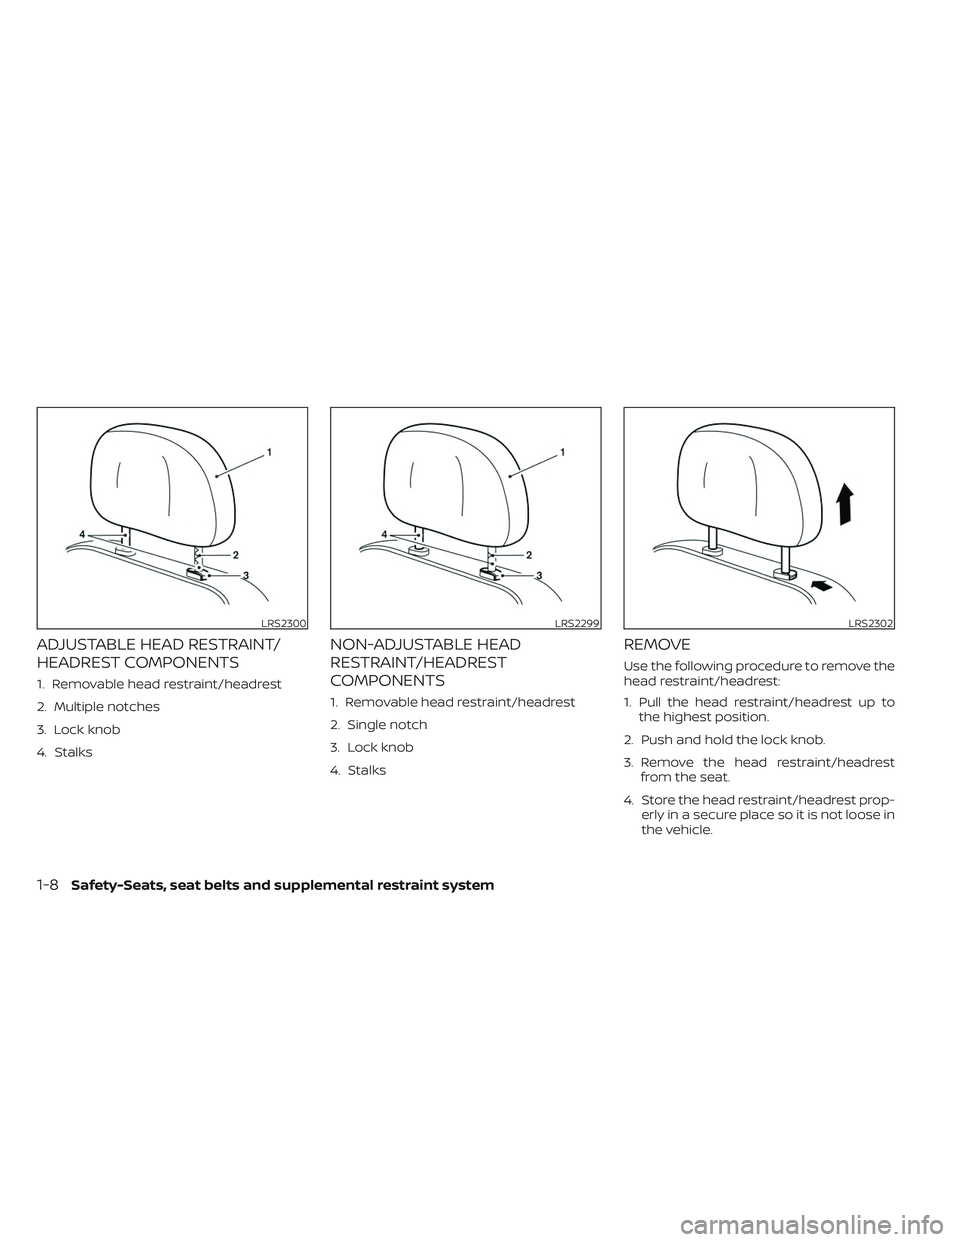 NISSAN MAXIMA 2023 Owners Manual ADJUSTABLE HEAD RESTRAINT/
HEADREST COMPONENTS
1. Removable head restraint/headrest
2. Multiple notches
3. Lock knob
4. Stalks
NON-ADJUSTABLE HEAD
RESTRAINT/HEADREST
COMPONENTS
1. Removable head restr